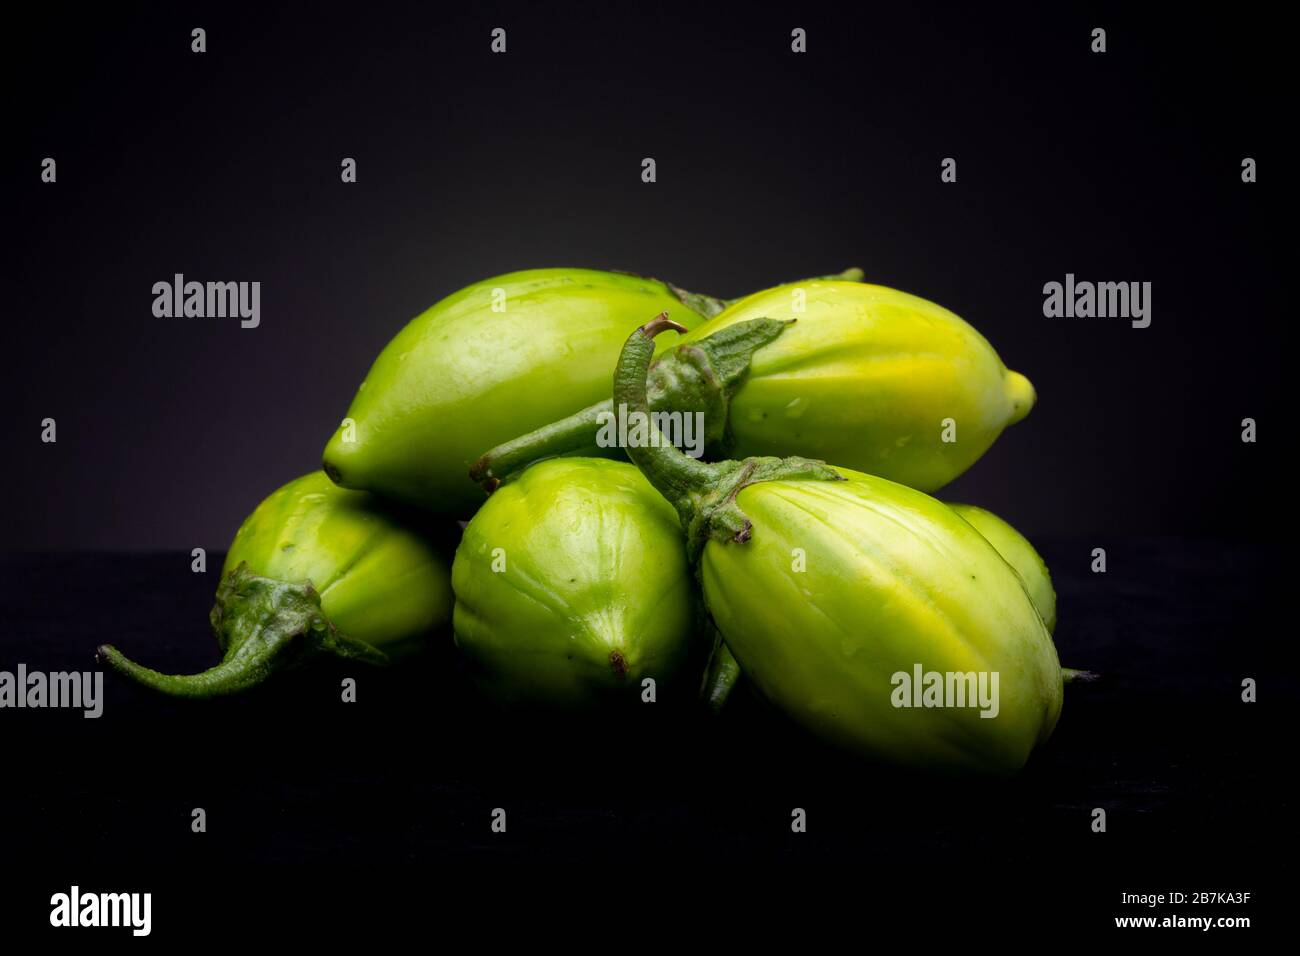 Scarlet eggplants (Jilos) – License Images – 296445 ❘ StockFood